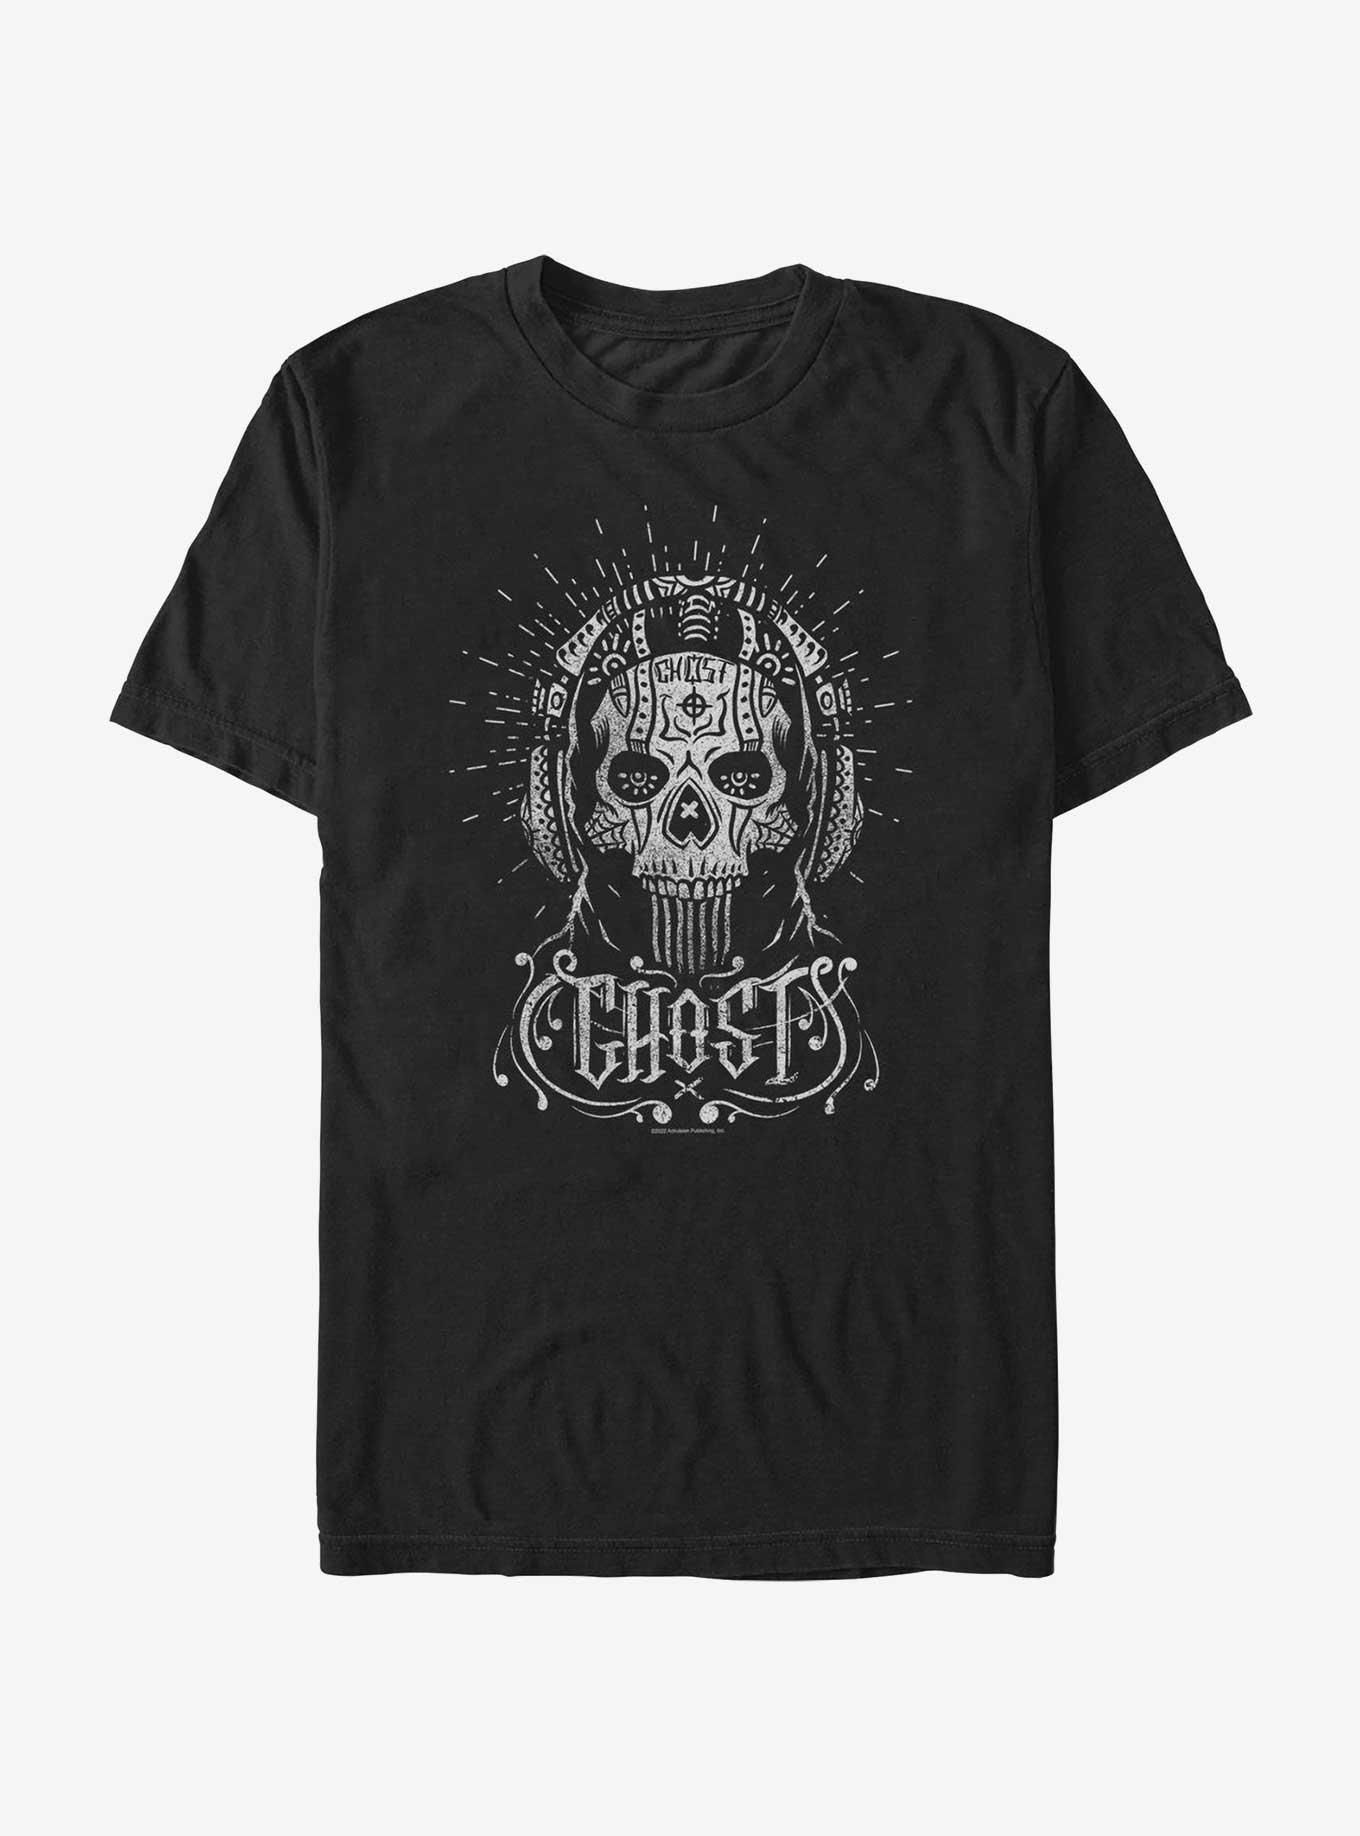 Call of Duty Ghost Sugar Skull T-Shirt